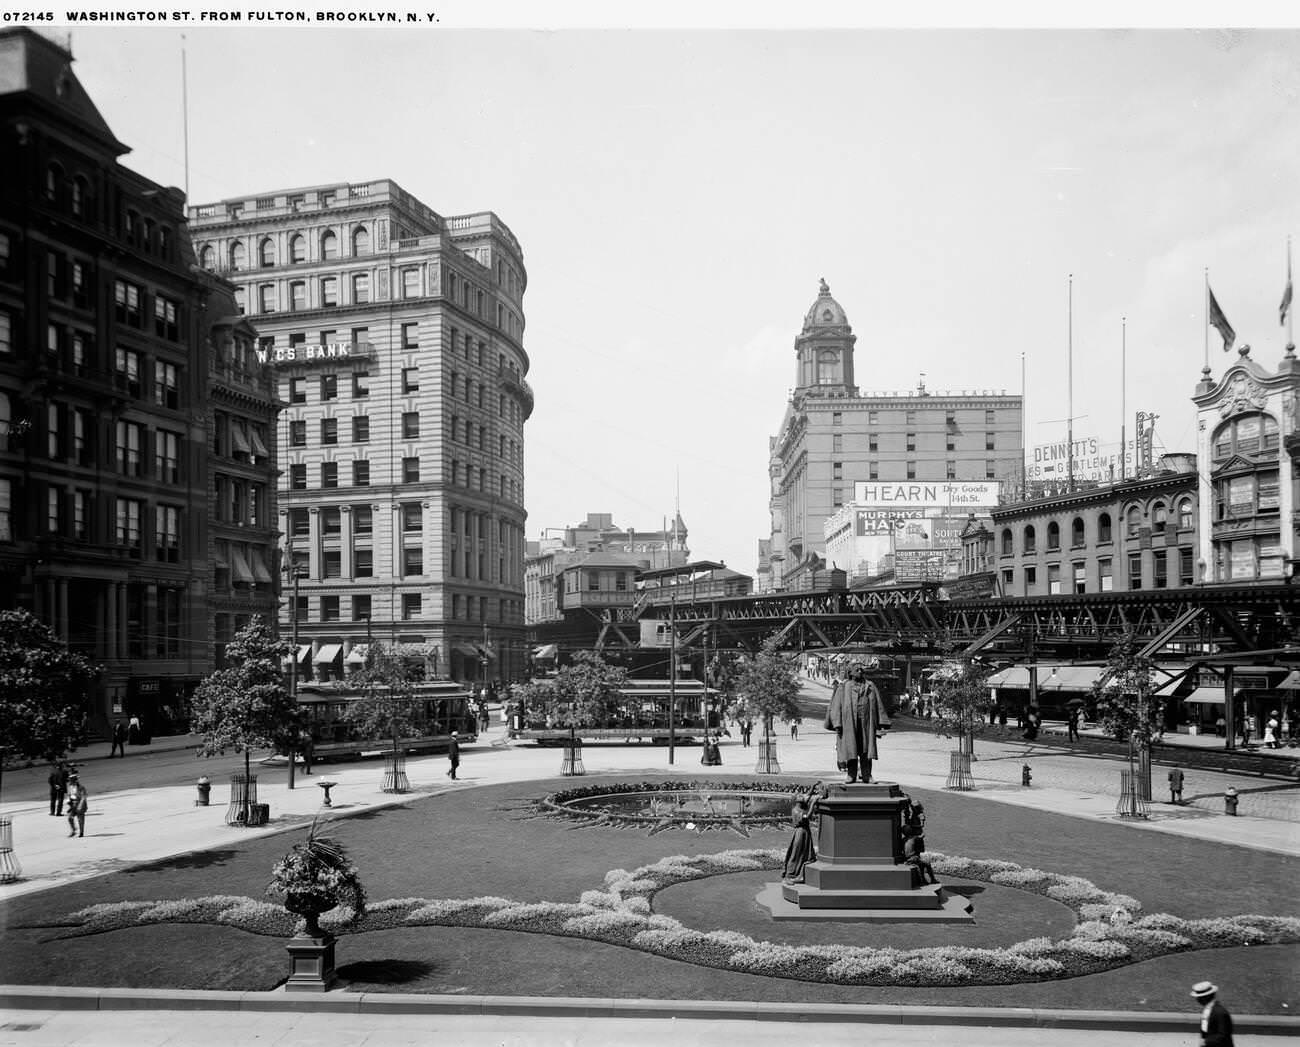 Washington St. From Fulton, Brooklyn, 1920S